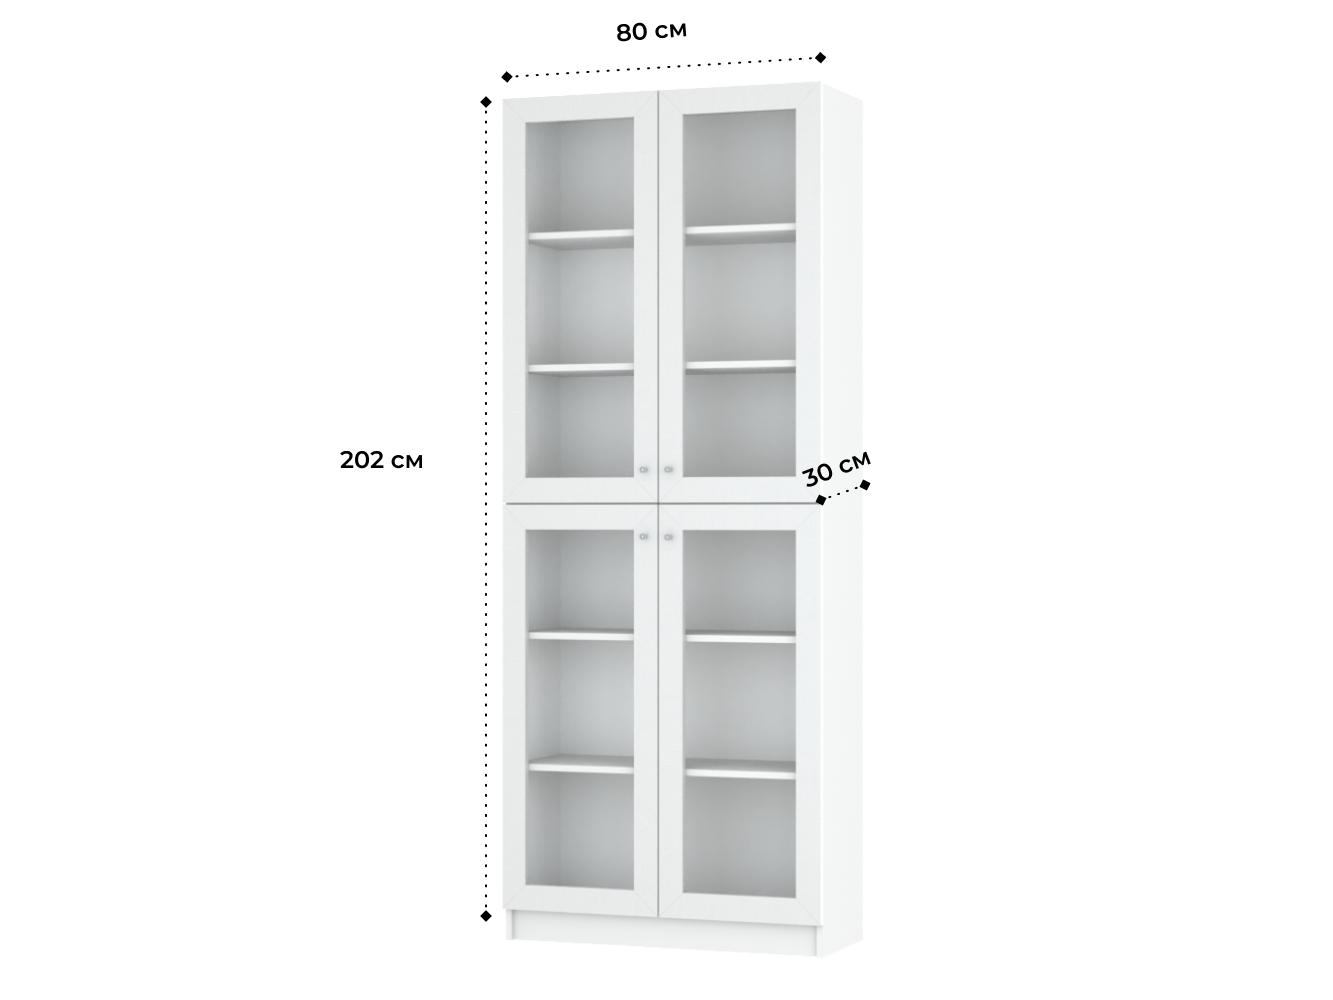  Книжный шкаф Билли 335 white ИКЕА (IKEA) изображение товара